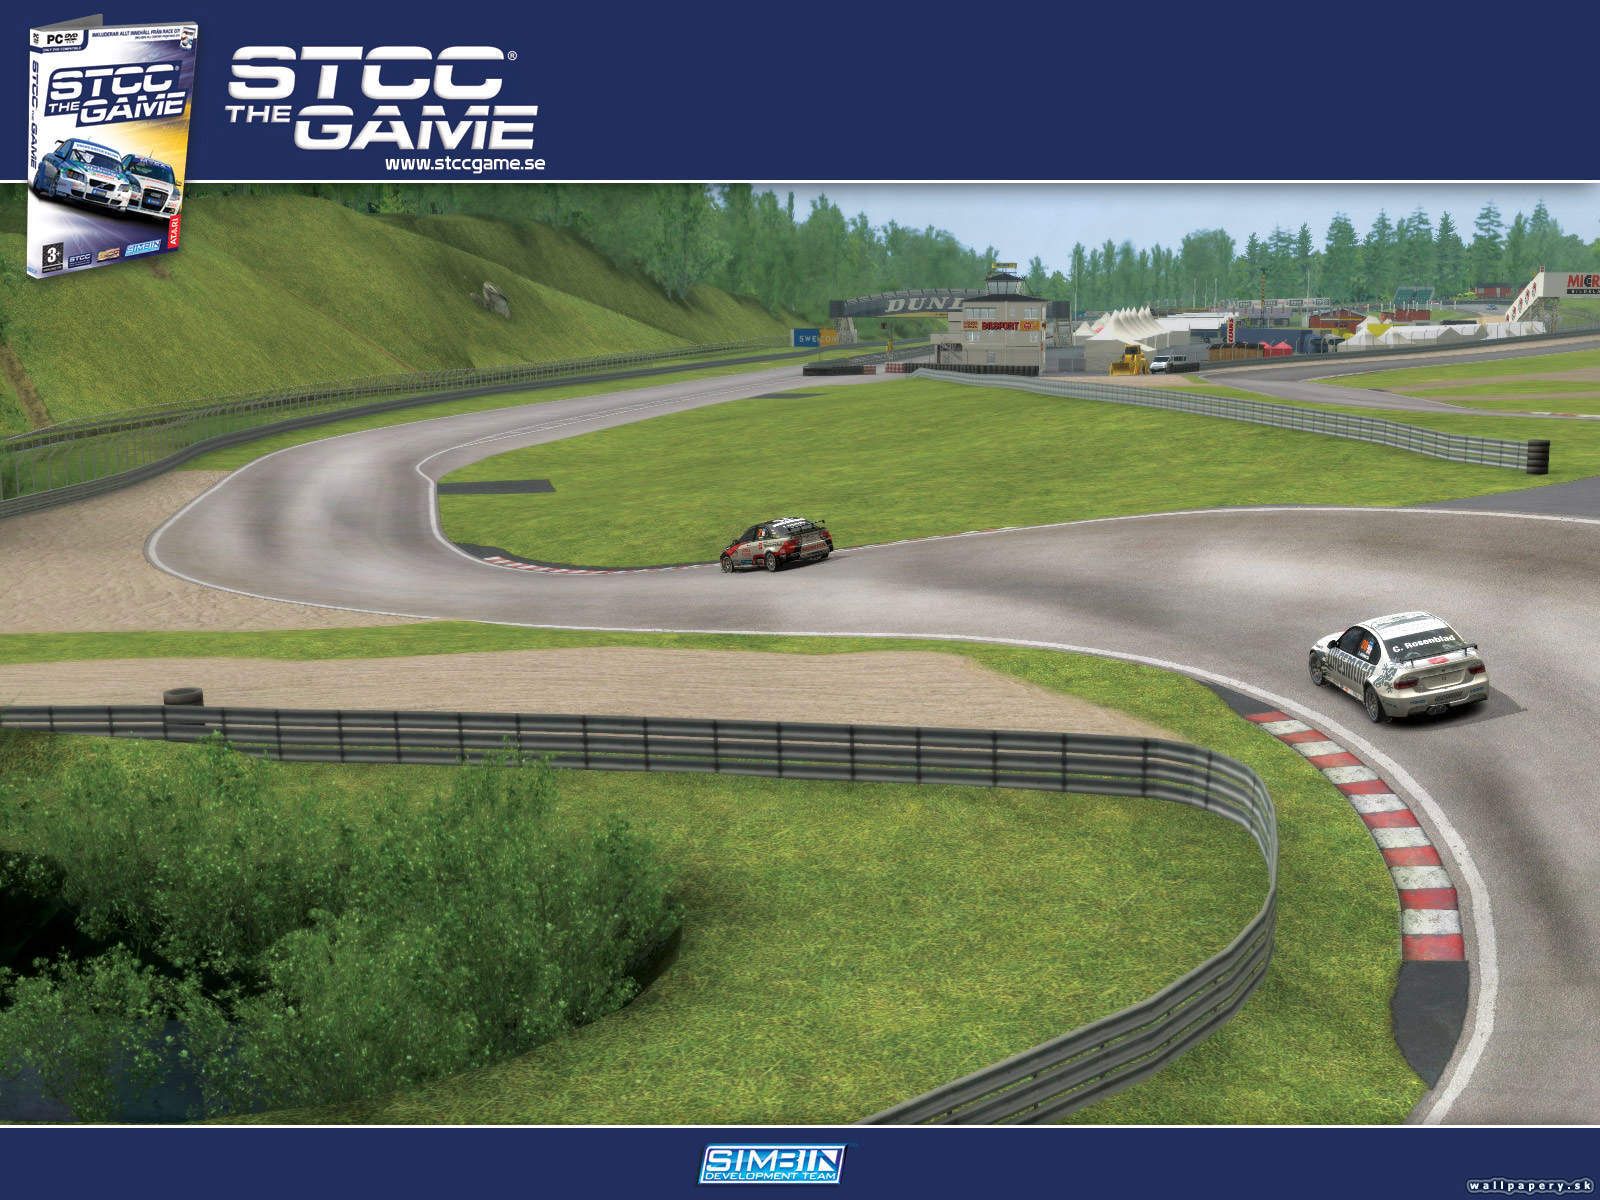 STCC - The Game - wallpaper 3